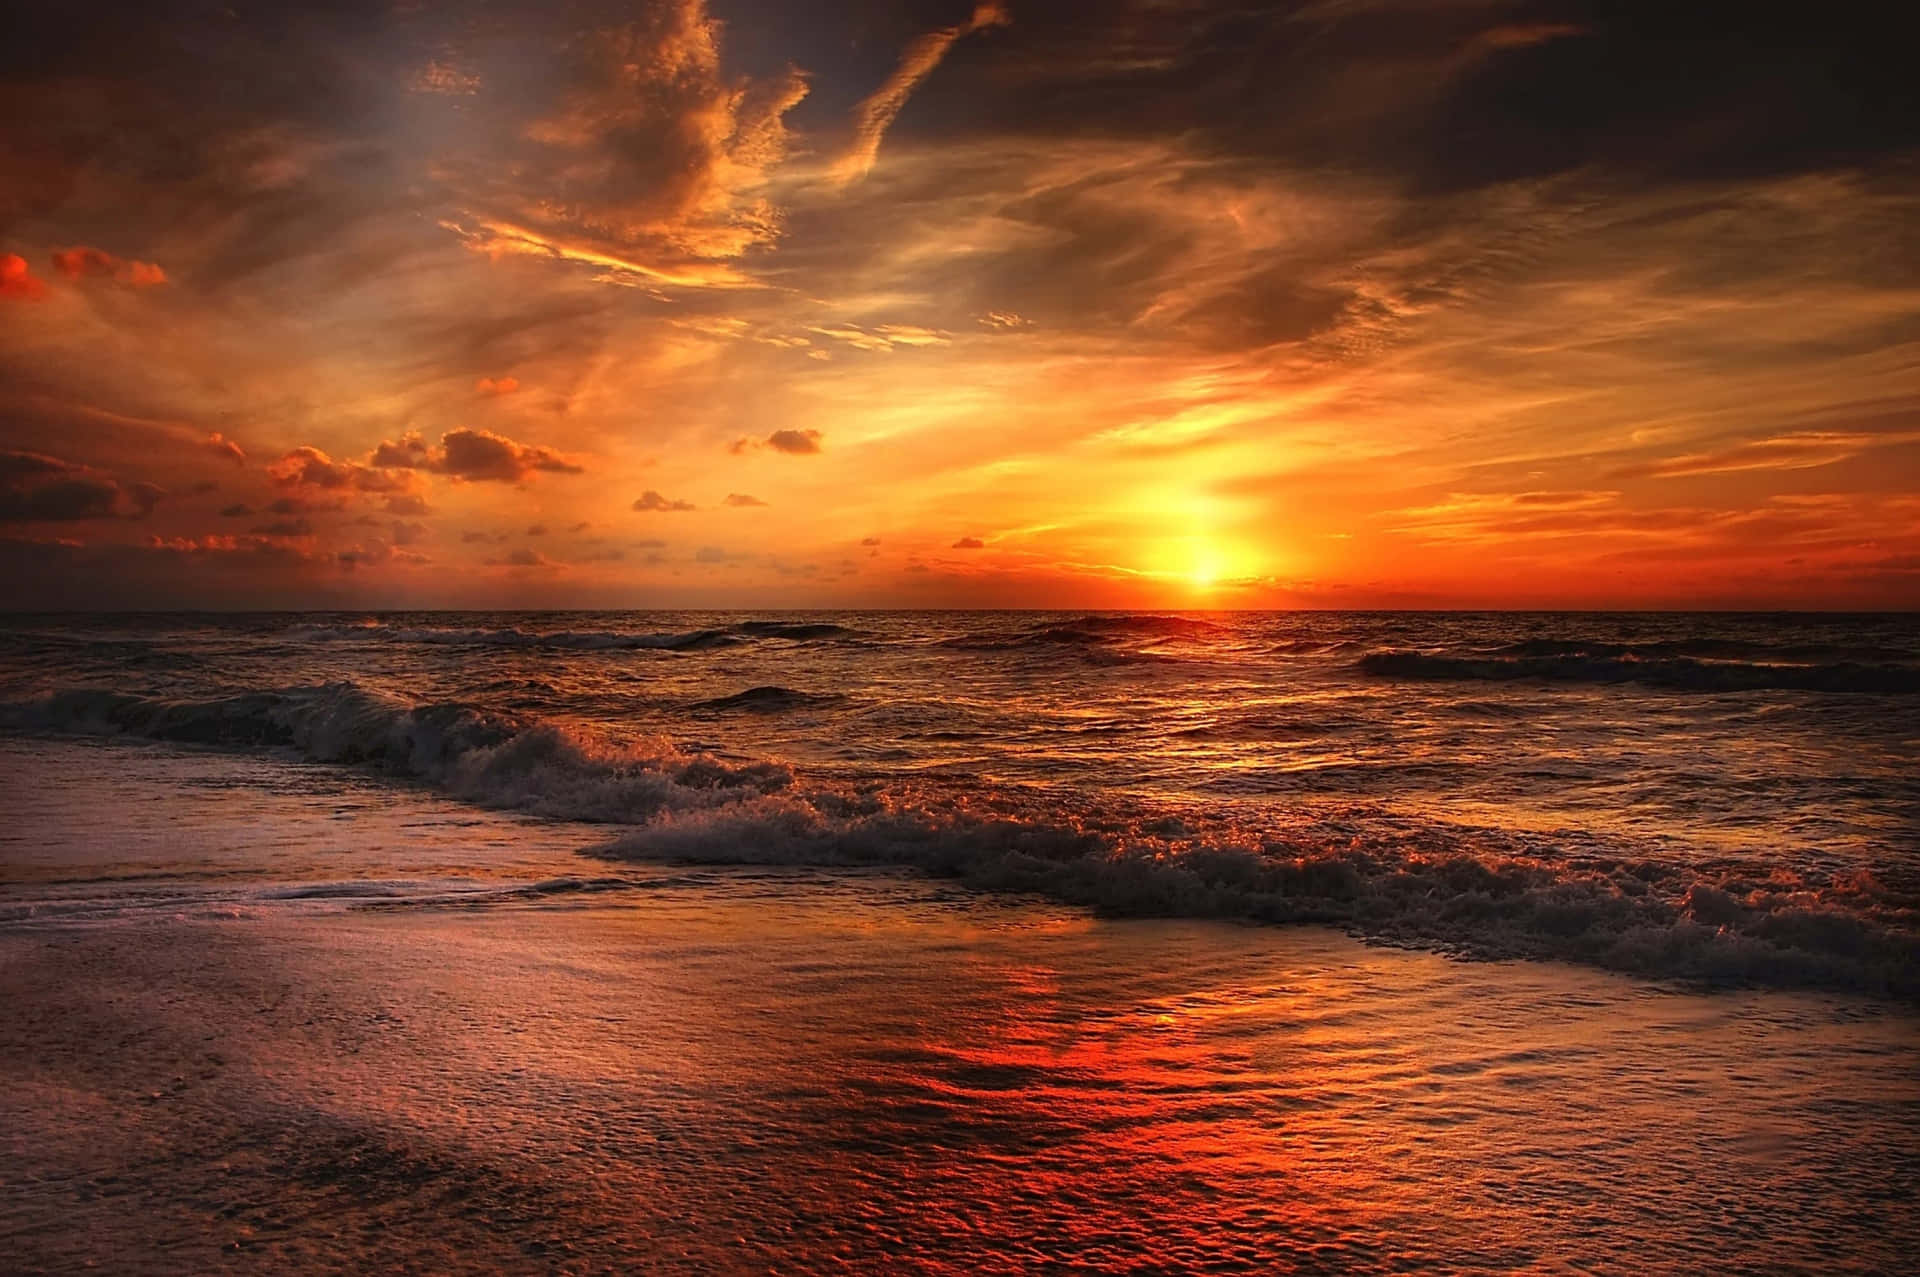 Serene Sunset on a Tranquil Beach